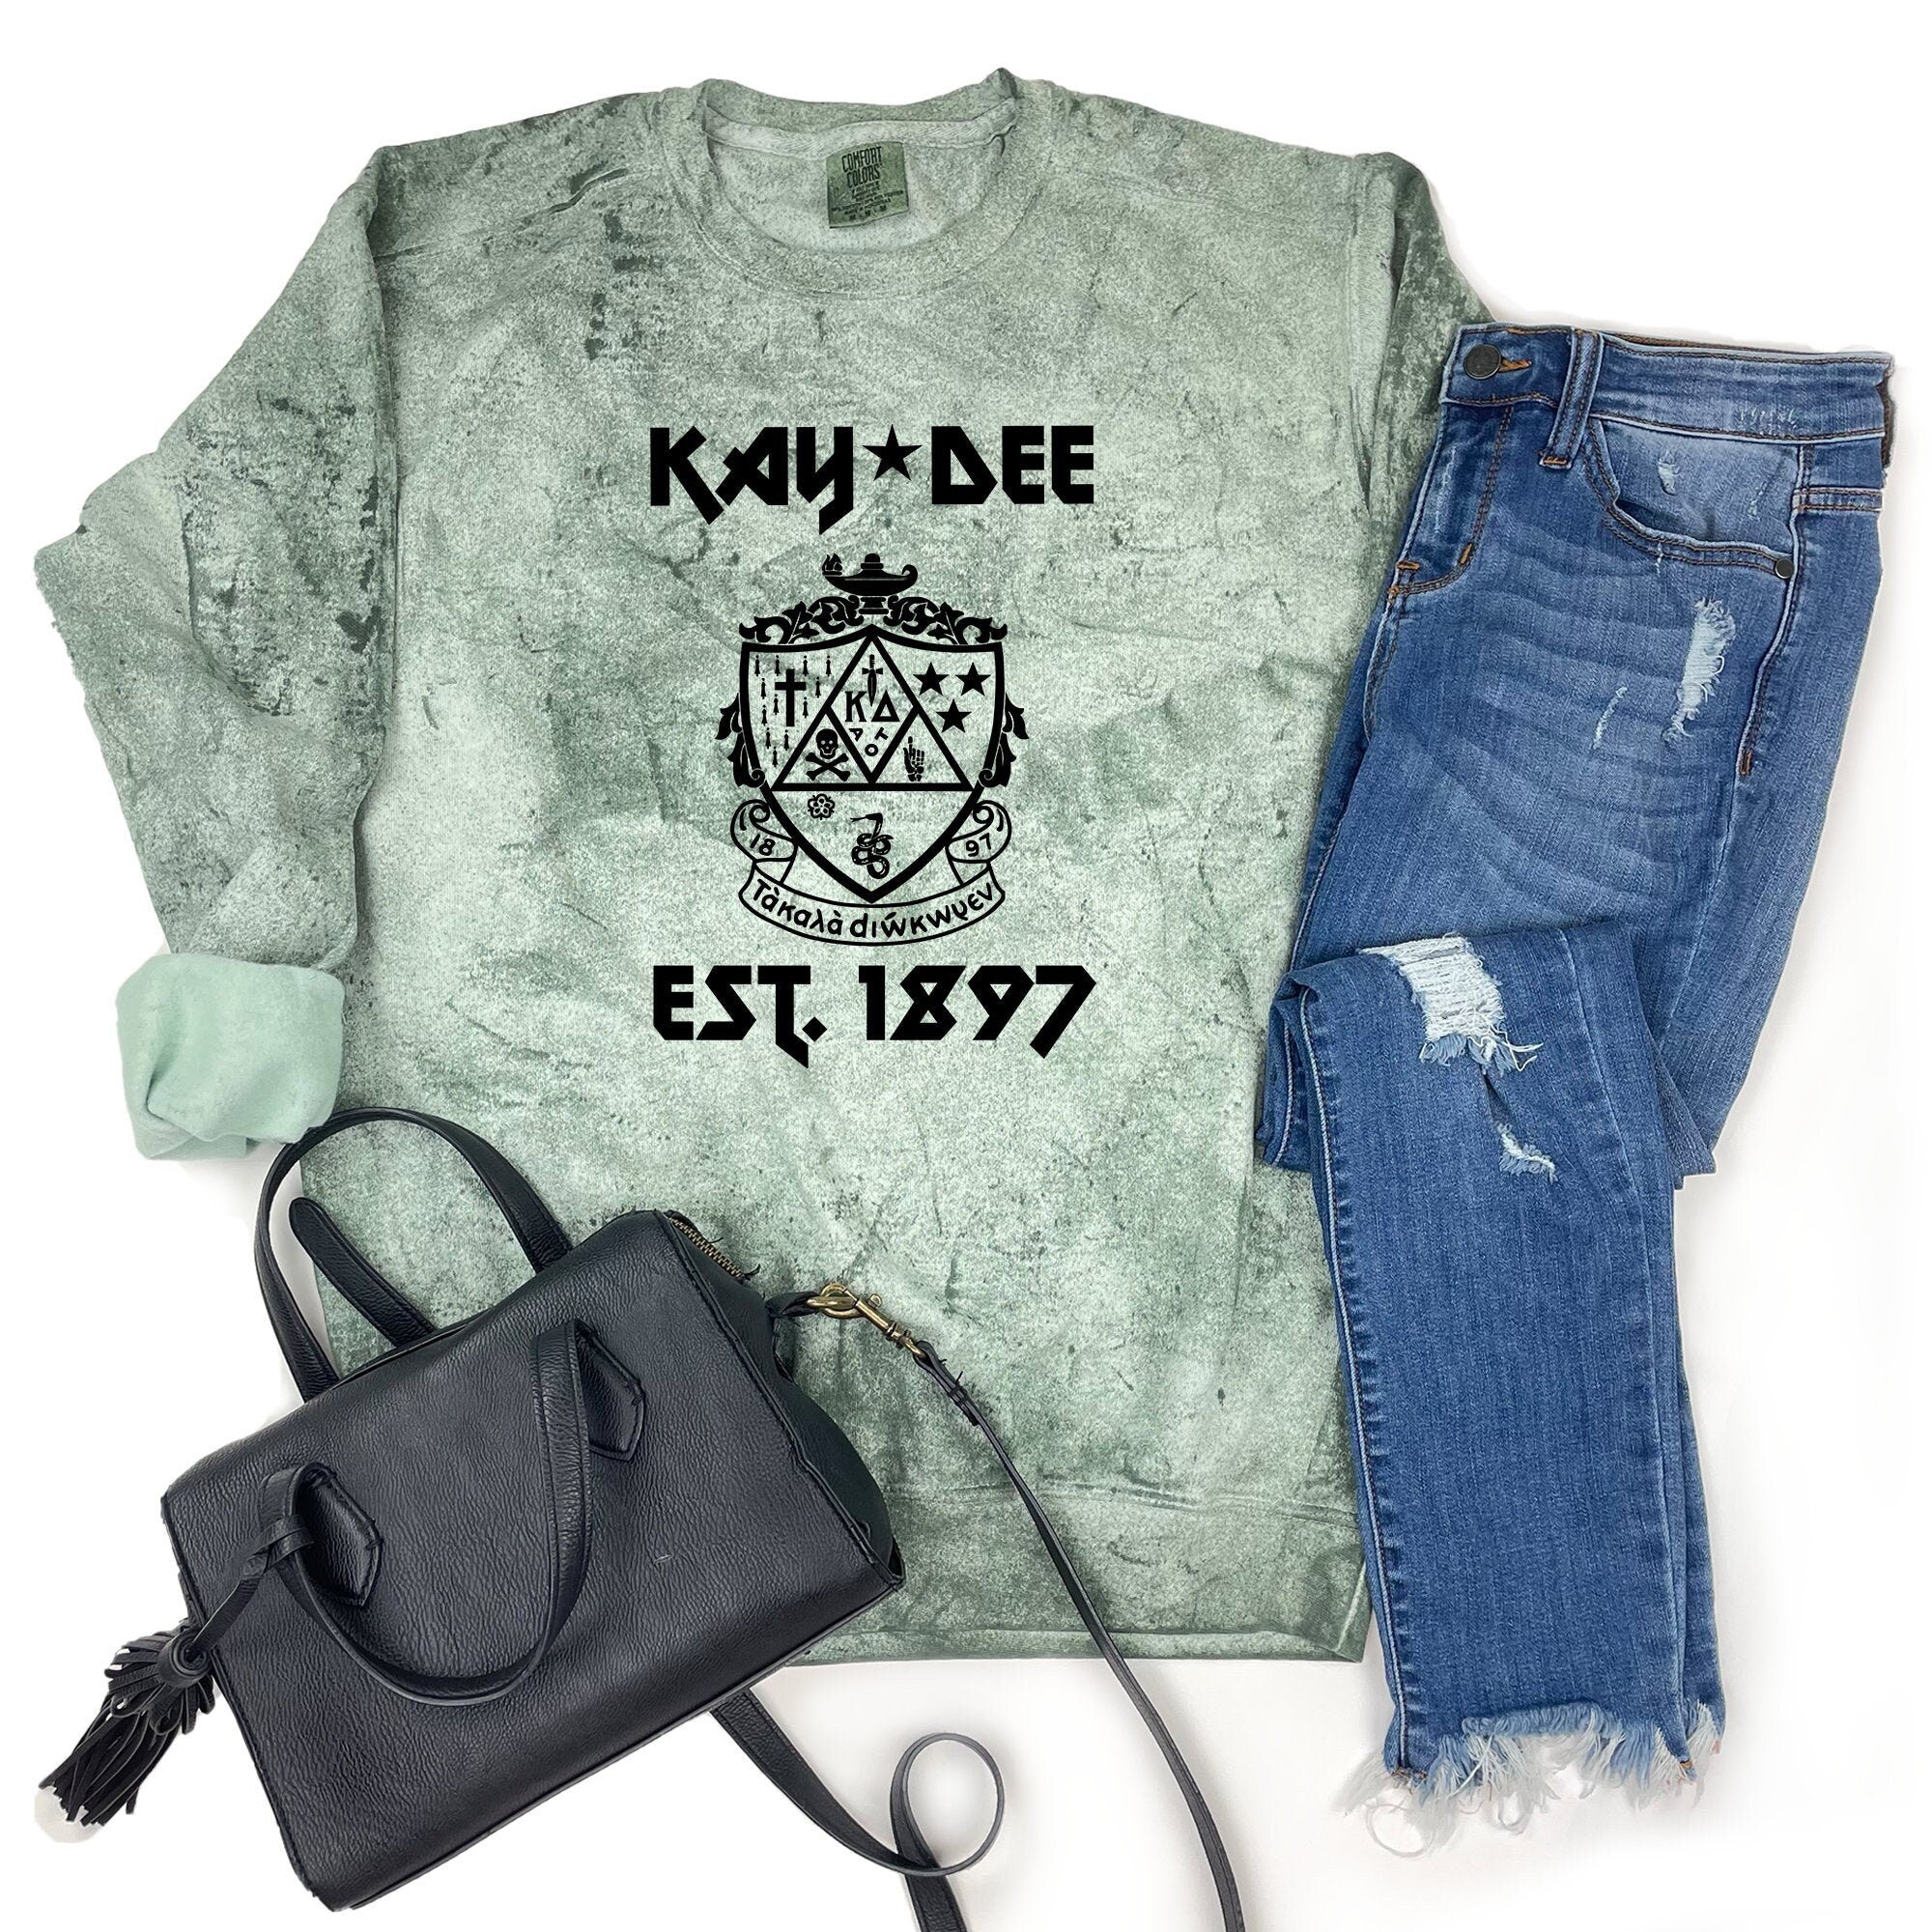 Kappa Delta Vintage Band Sweatshirt - Go Greek Chic